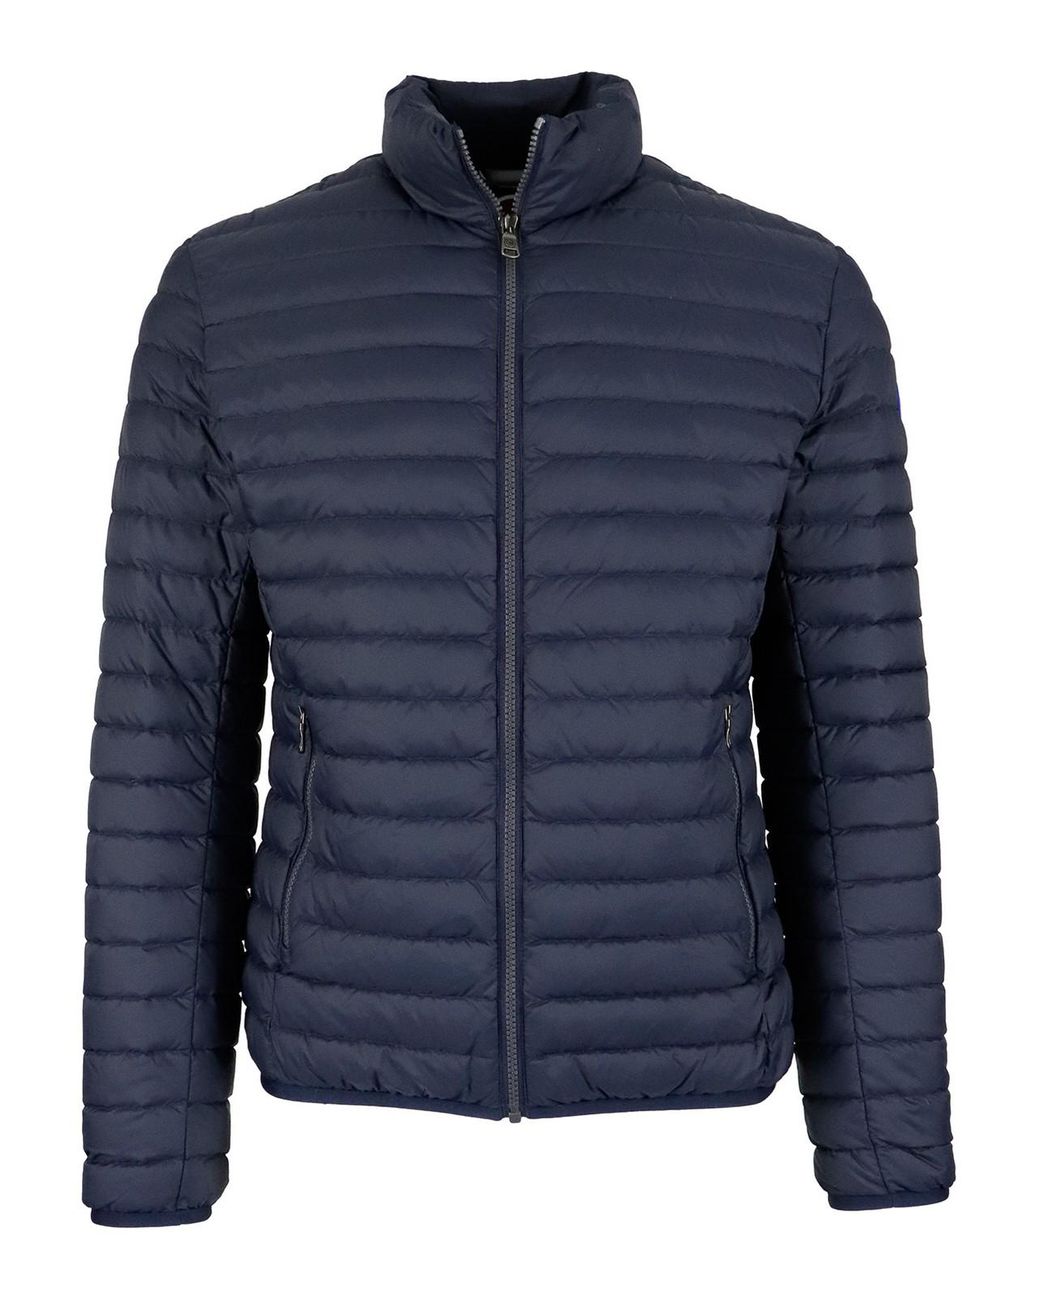 Colmar Lightweight Tech Fabric Puffer Jacket in Blue for Men - Lyst